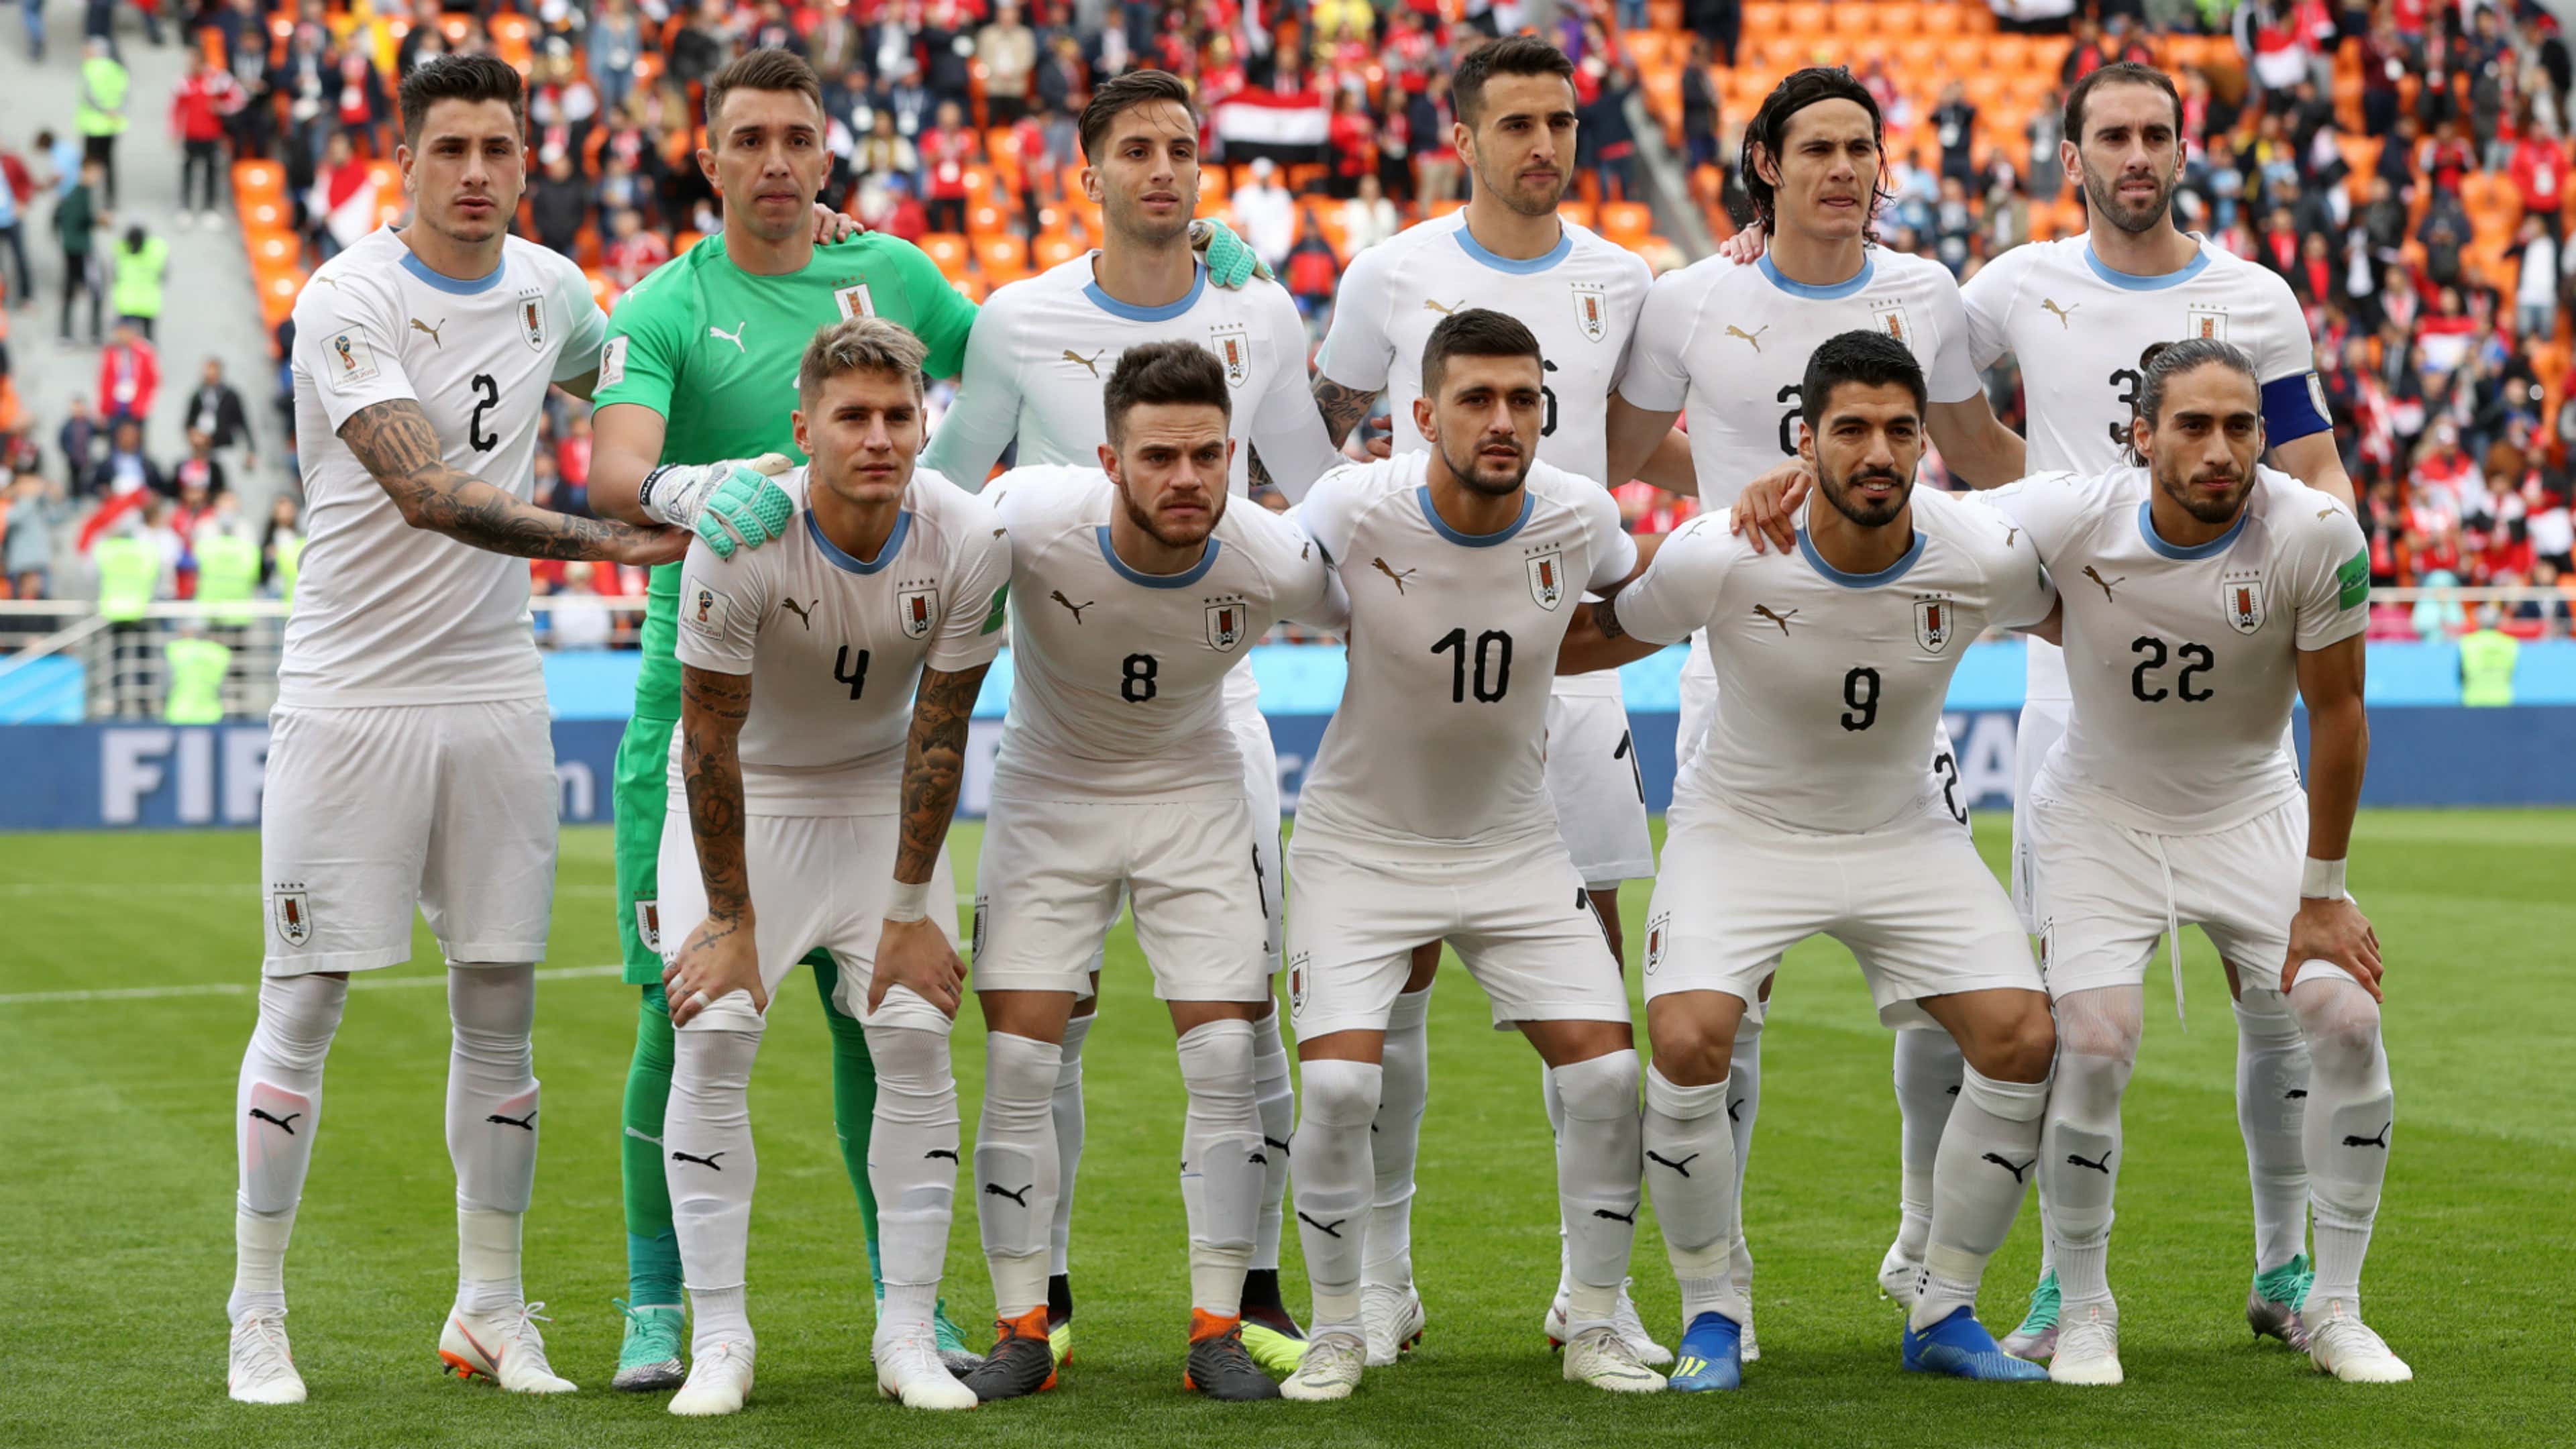 Uruguay WM 2018 Kader Ergebnisse Highlights